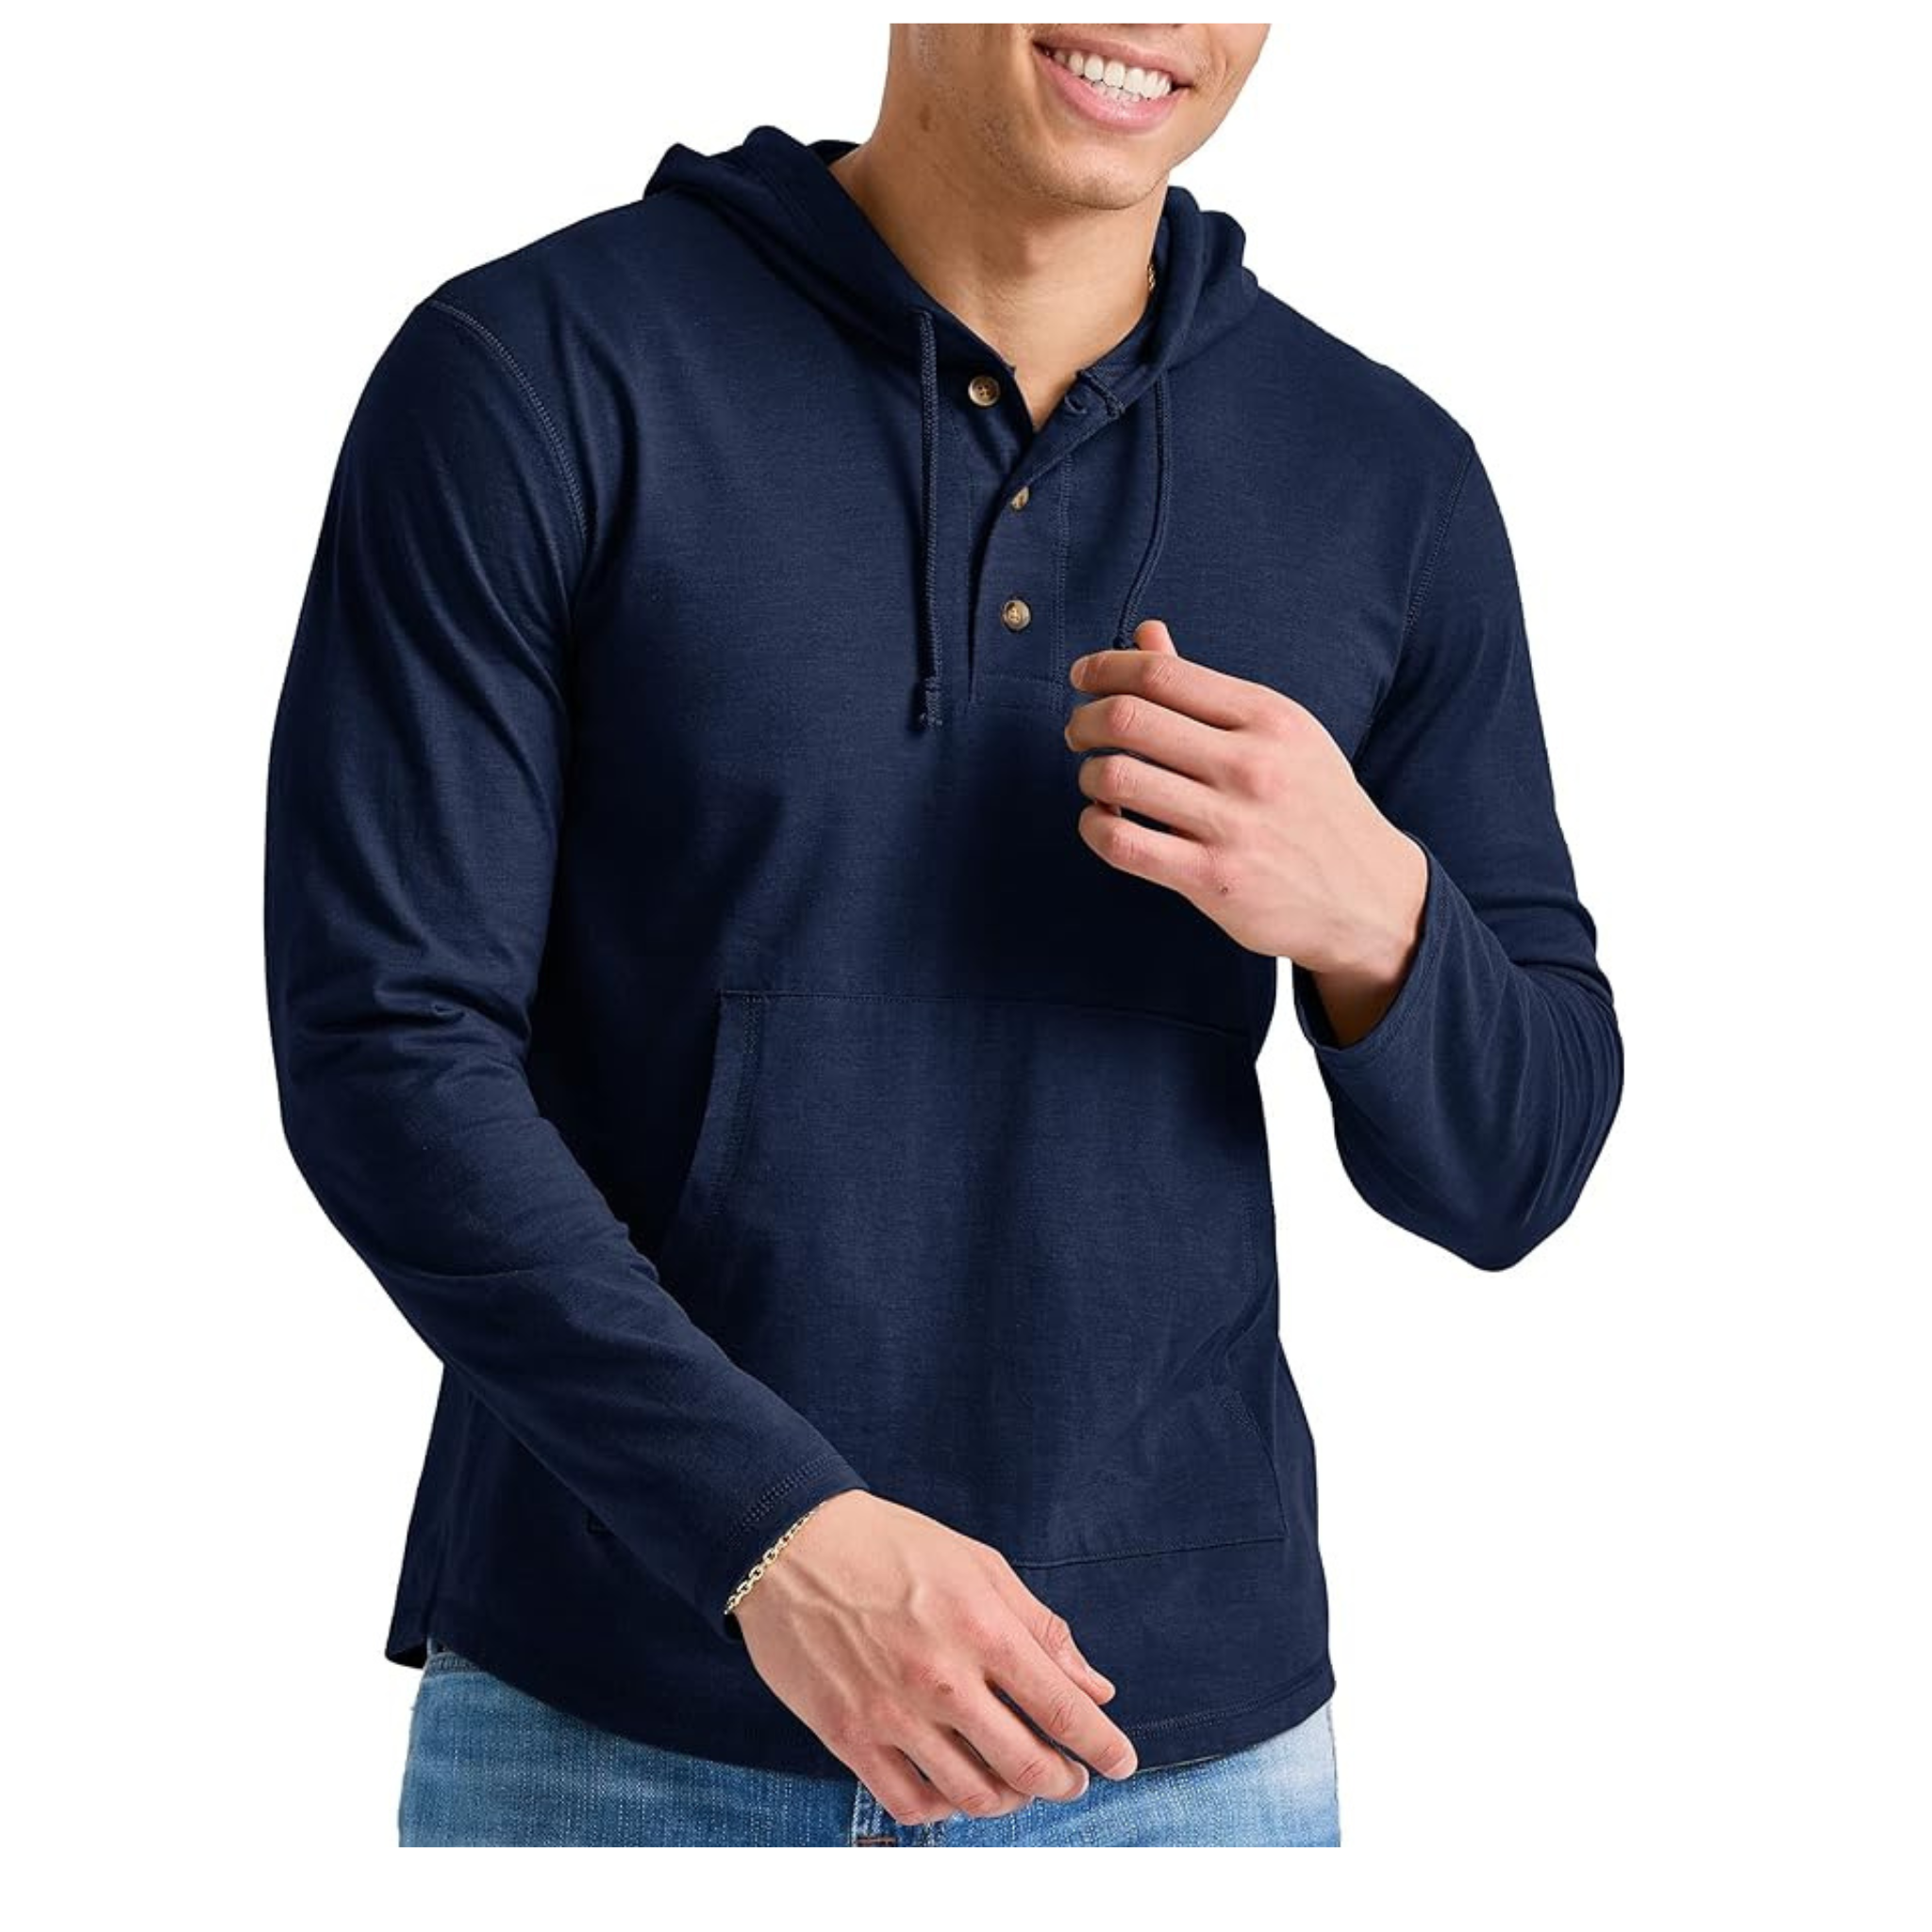 Hanes Men’s Originals Tri-Blend Jersey T-Shirt Hoodie With Henley Collar